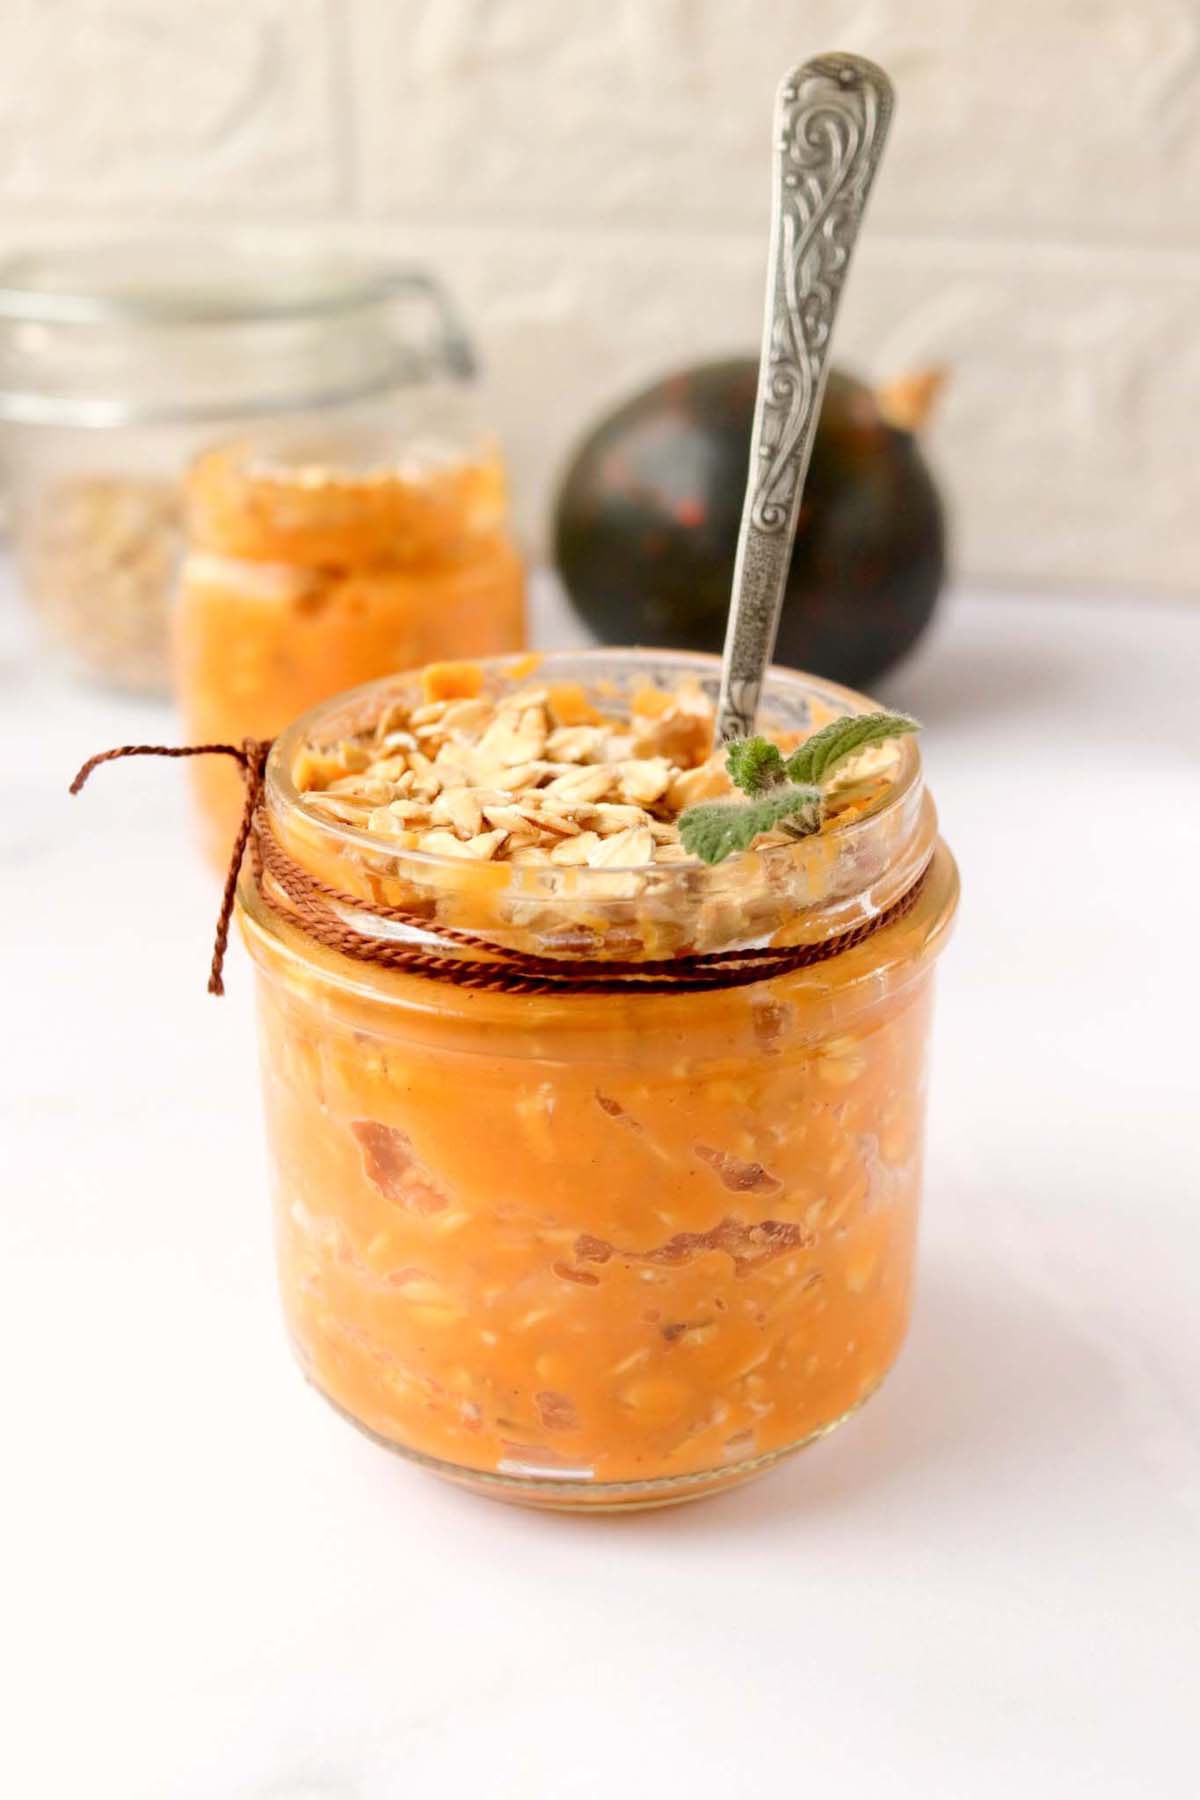 pumpkin oats in a jar with a spoon.